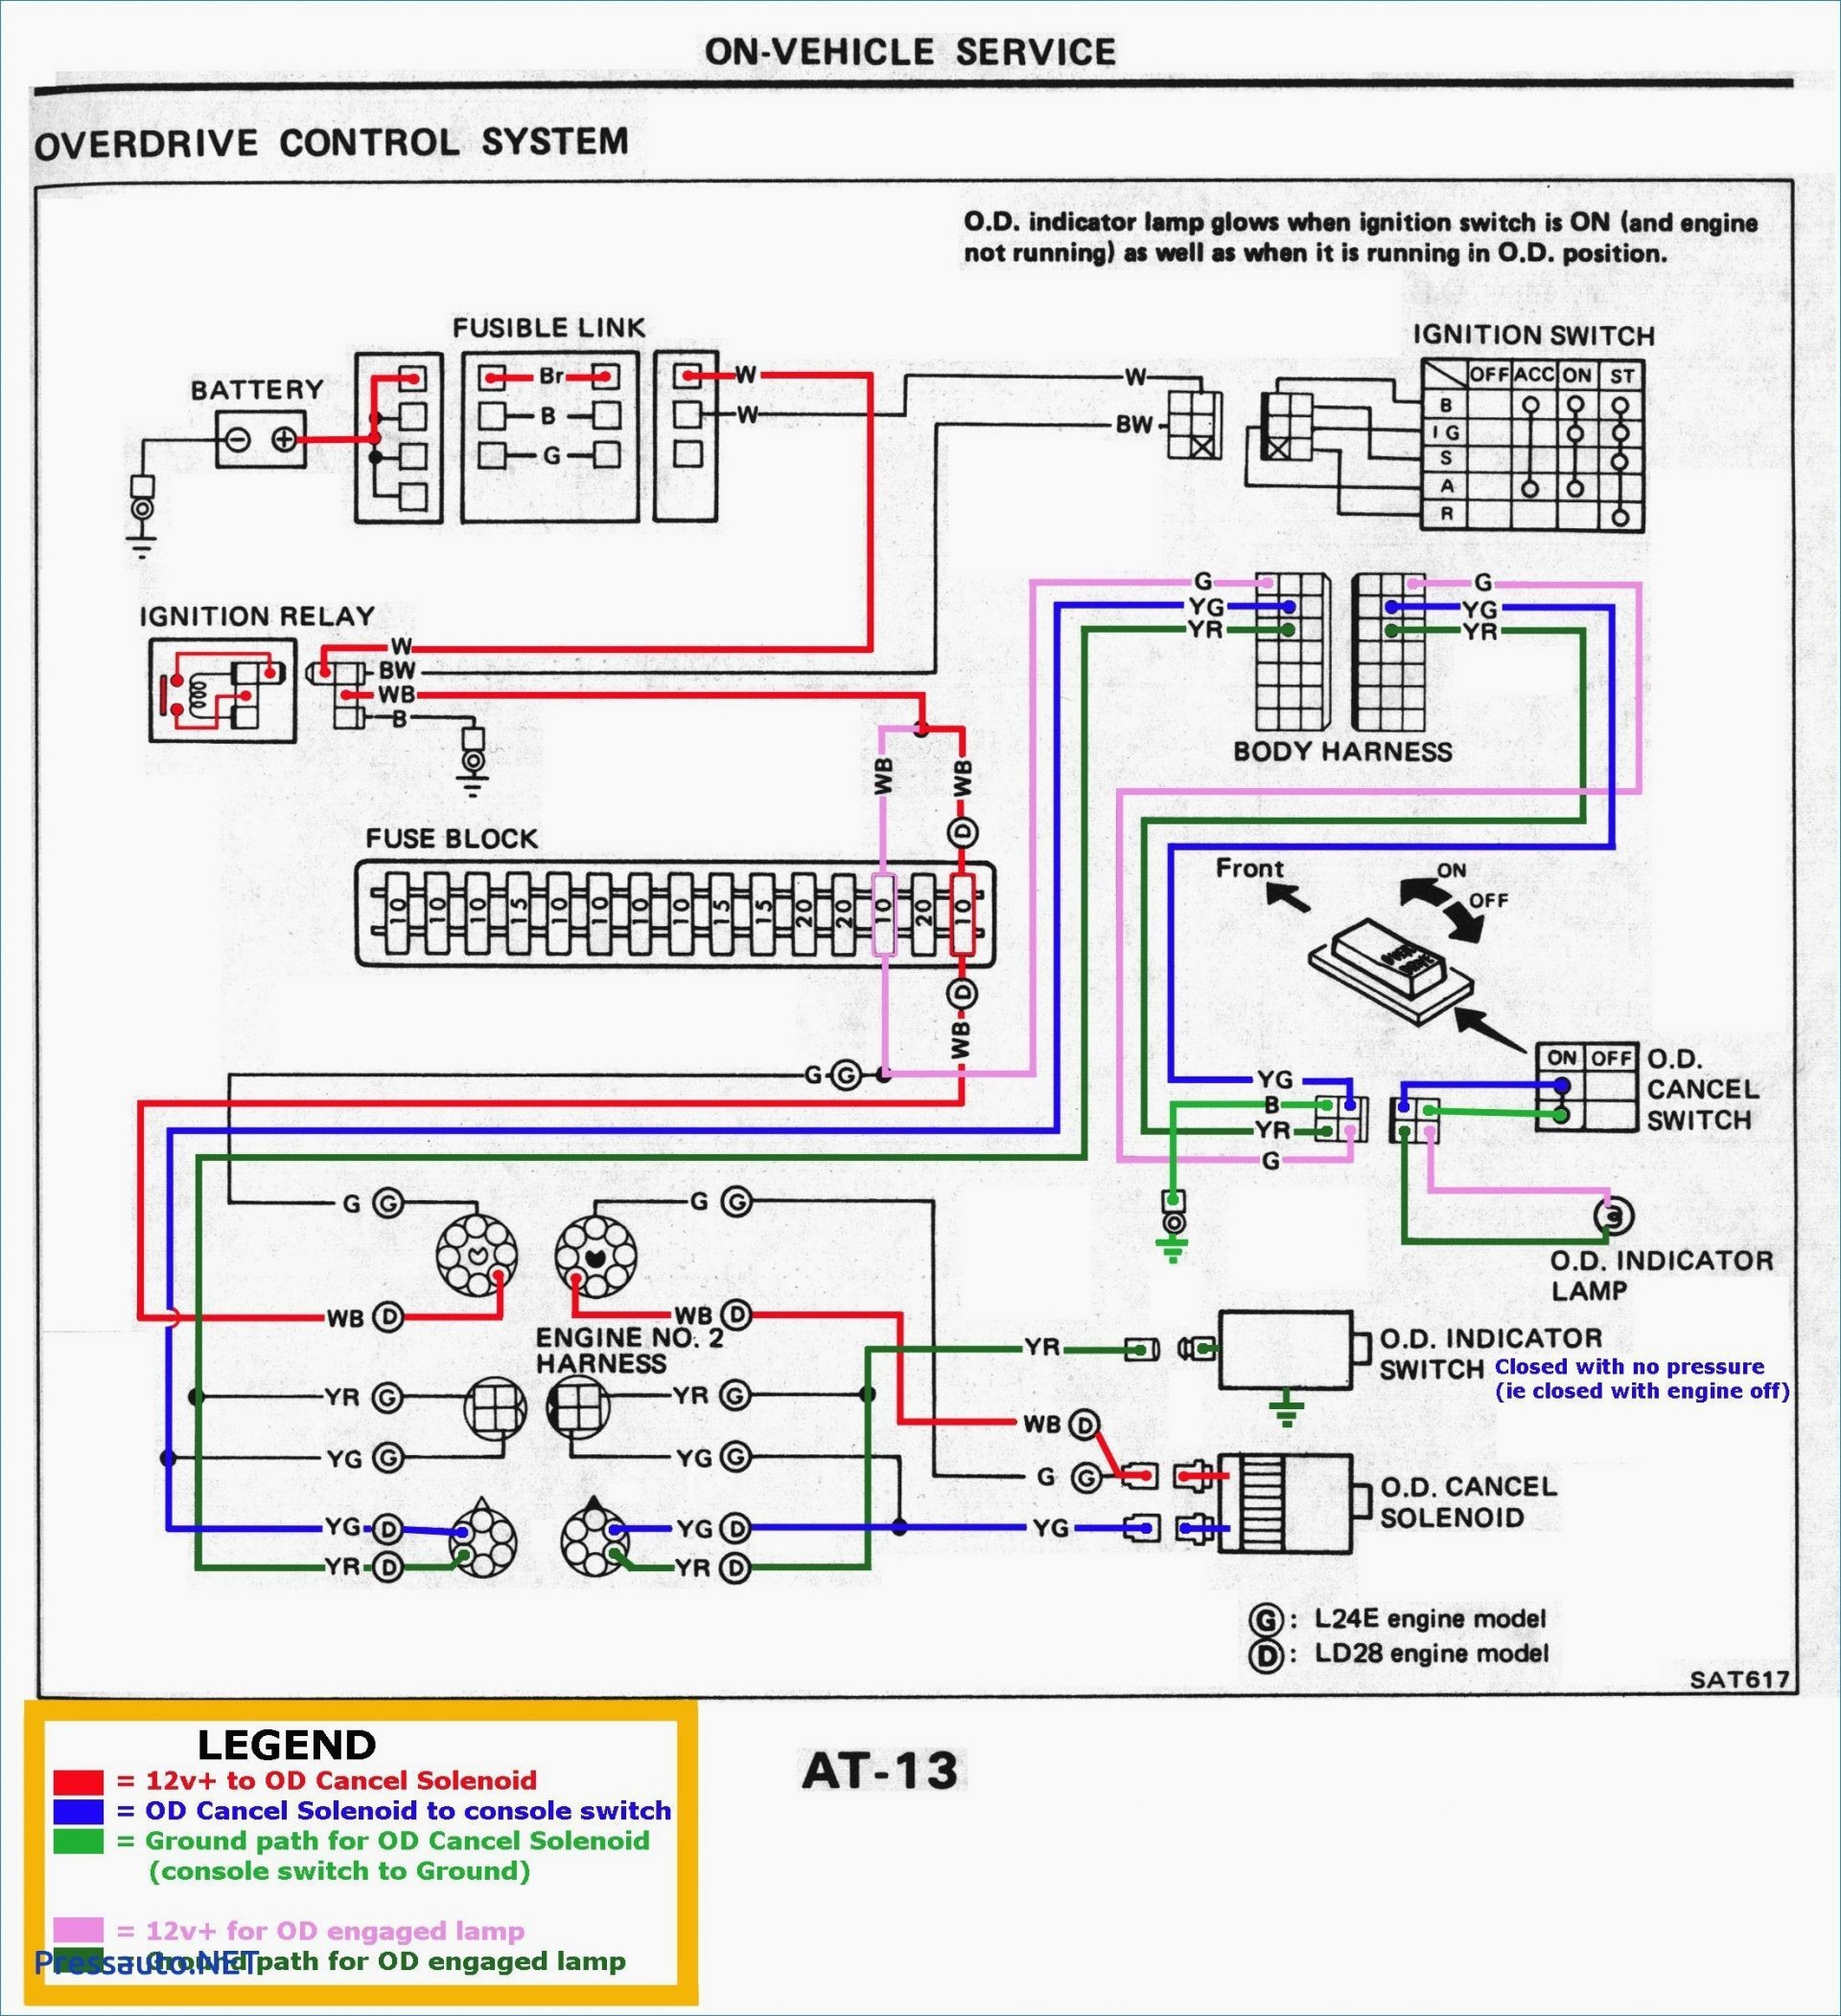 Suzuki forenza Engine Diagram Wiring Diagrams for A 1992 Suzuki Carry Schematics Wiring Diagrams • Of Suzuki forenza Engine Diagram